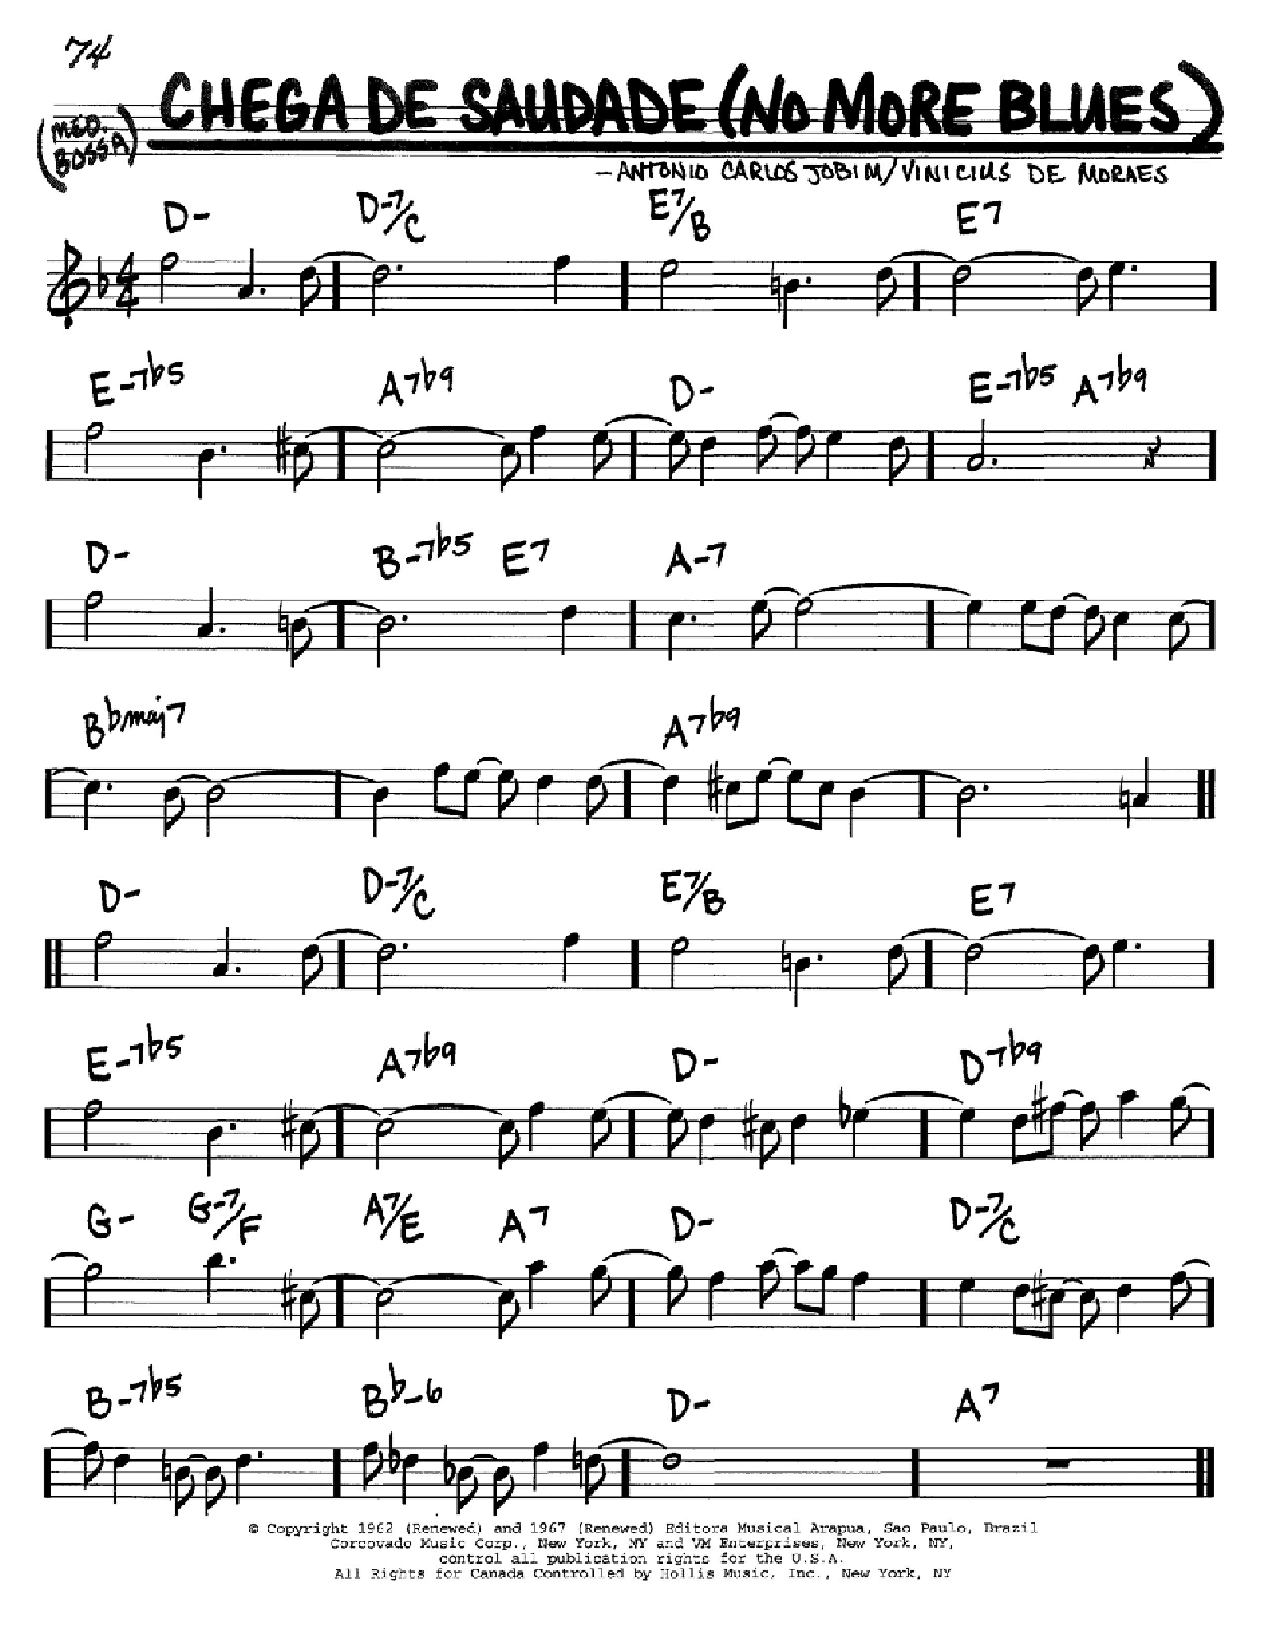 Antonio Carlos Jobim Chega De Saudade (No More Blues) Sheet Music Notes & Chords for Real Book - Melody, Lyrics & Chords - C Instruments - Download or Print PDF